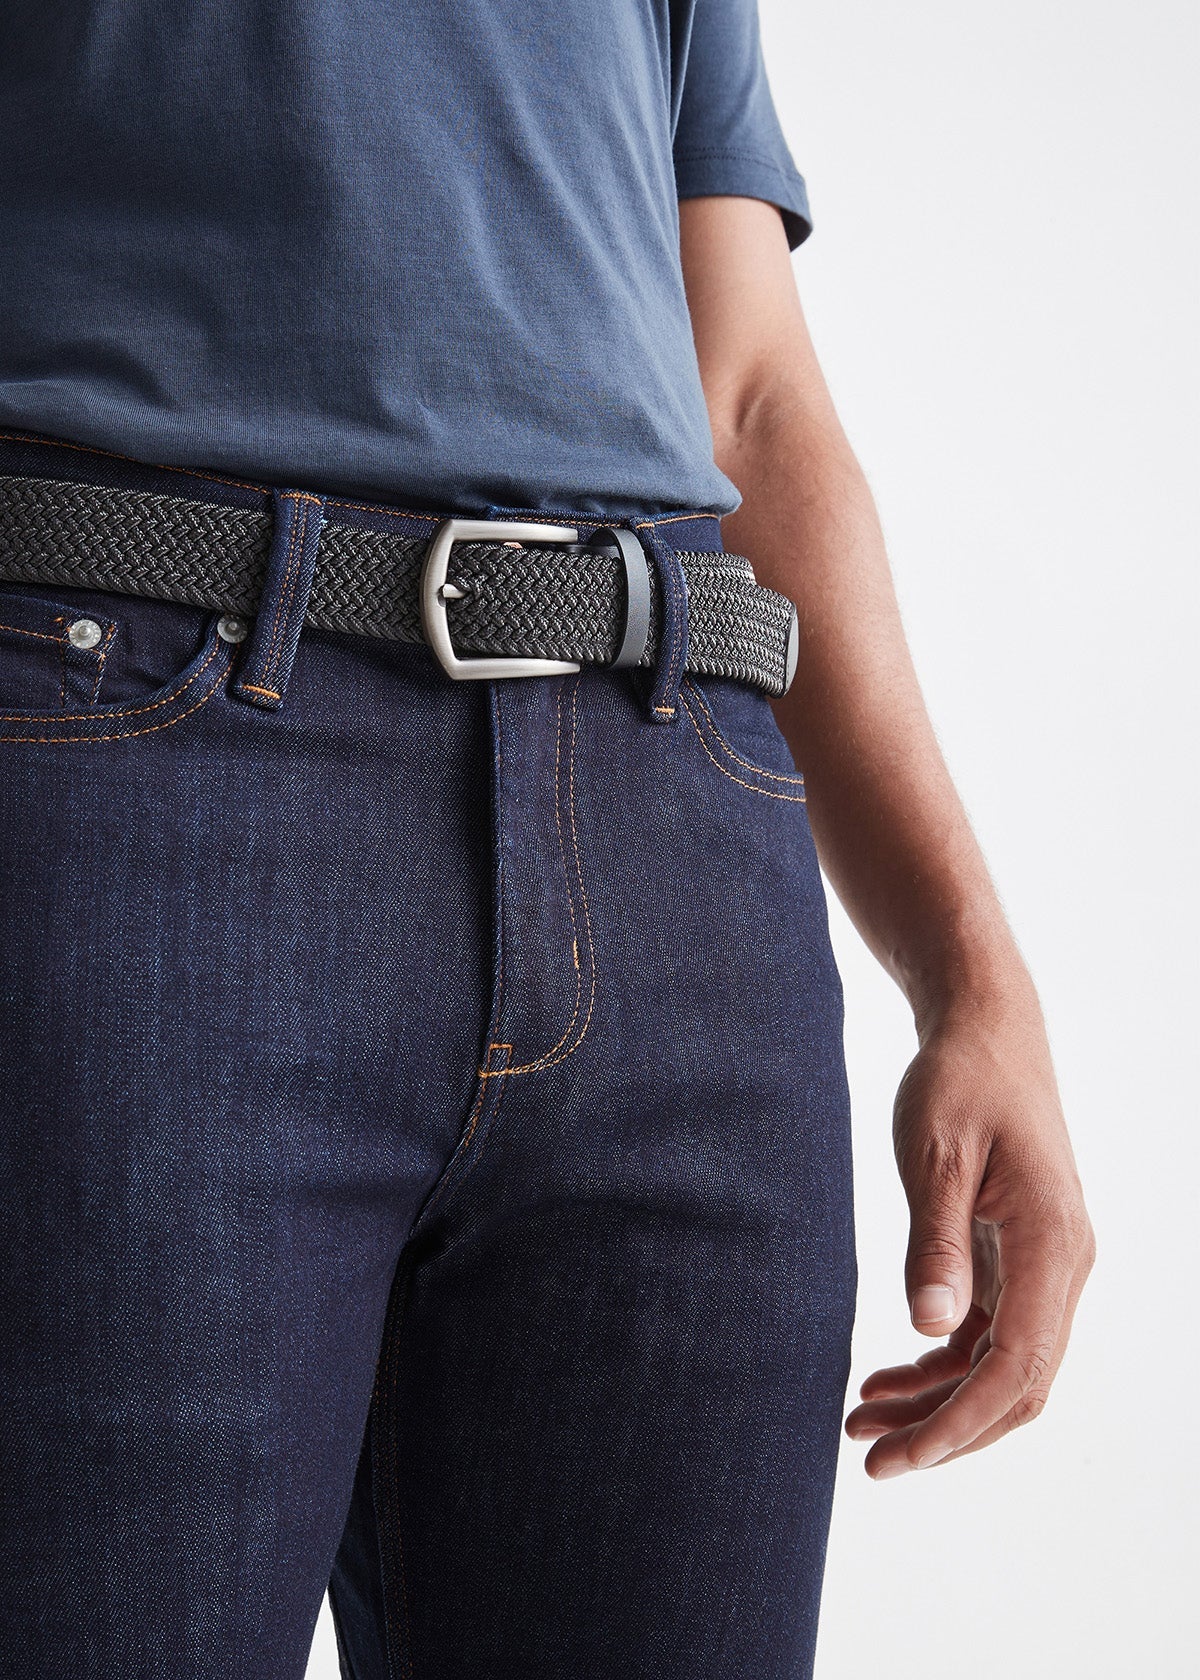  Extreme Fit Men's Adjustable Double-Compression Waist-Slimming  Belt Beige : Sports & Outdoors